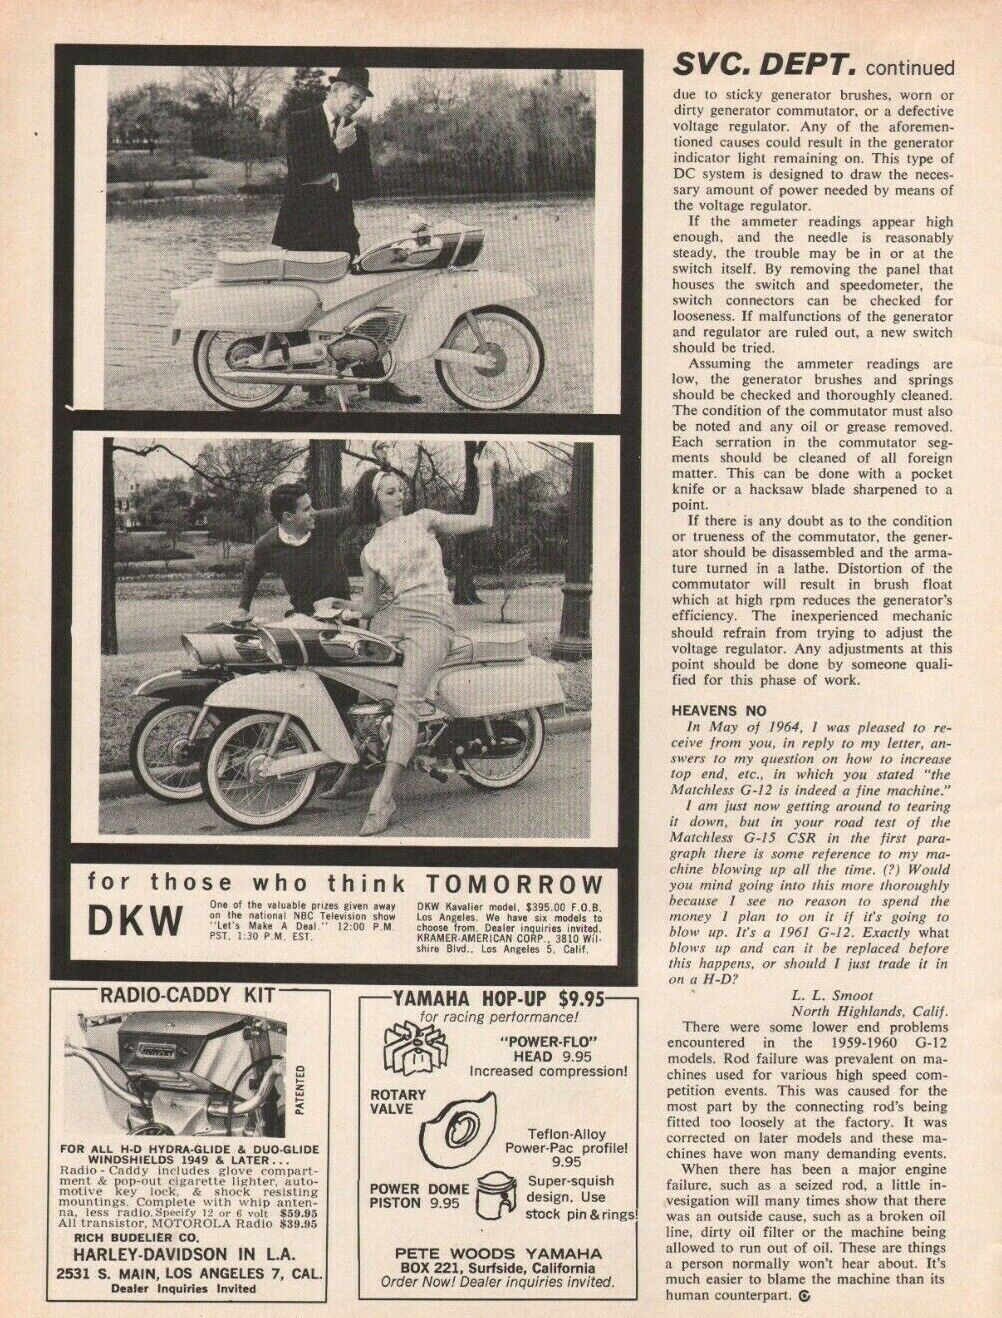 1965 Dkw Kavalier - Vintage Motorcycle Ad